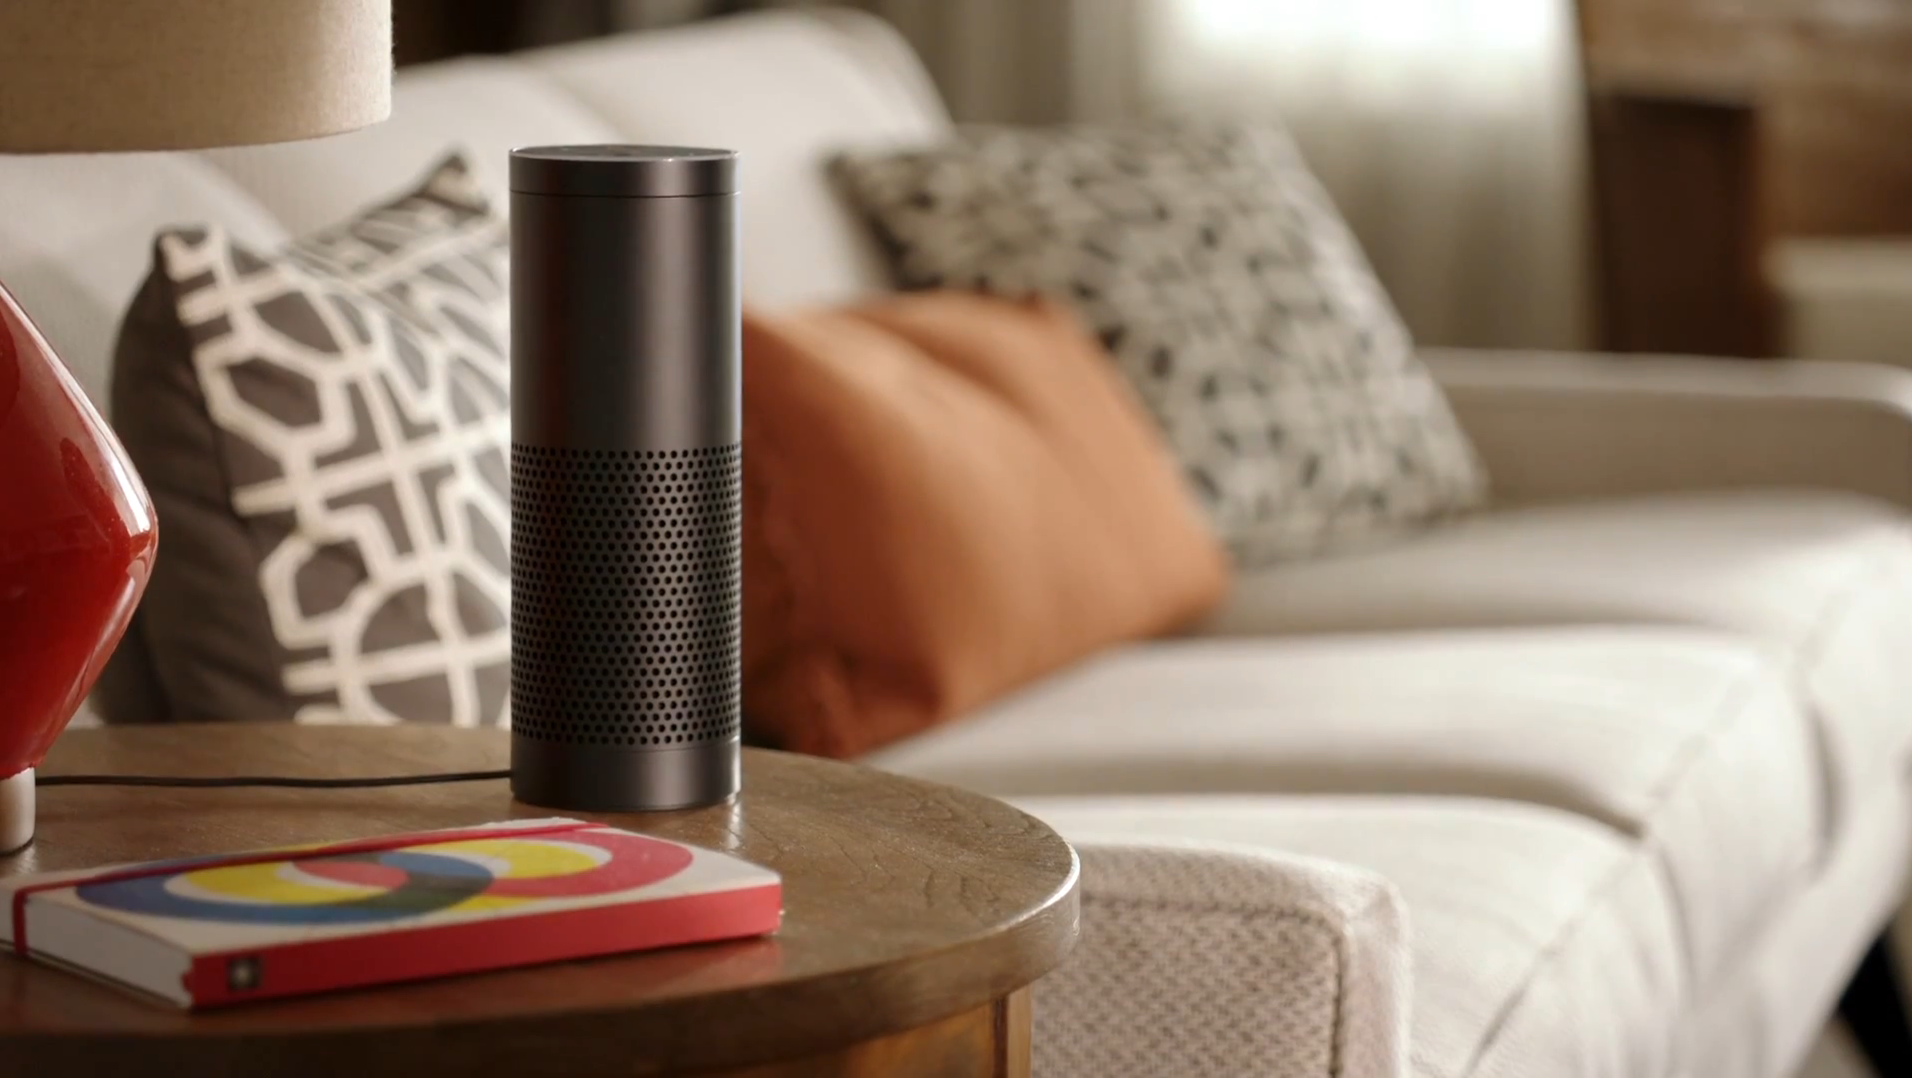 Cara mengatur Amazon Echo: Panduan langkah demi langkah untuk mengatur perangkat Echo Anda